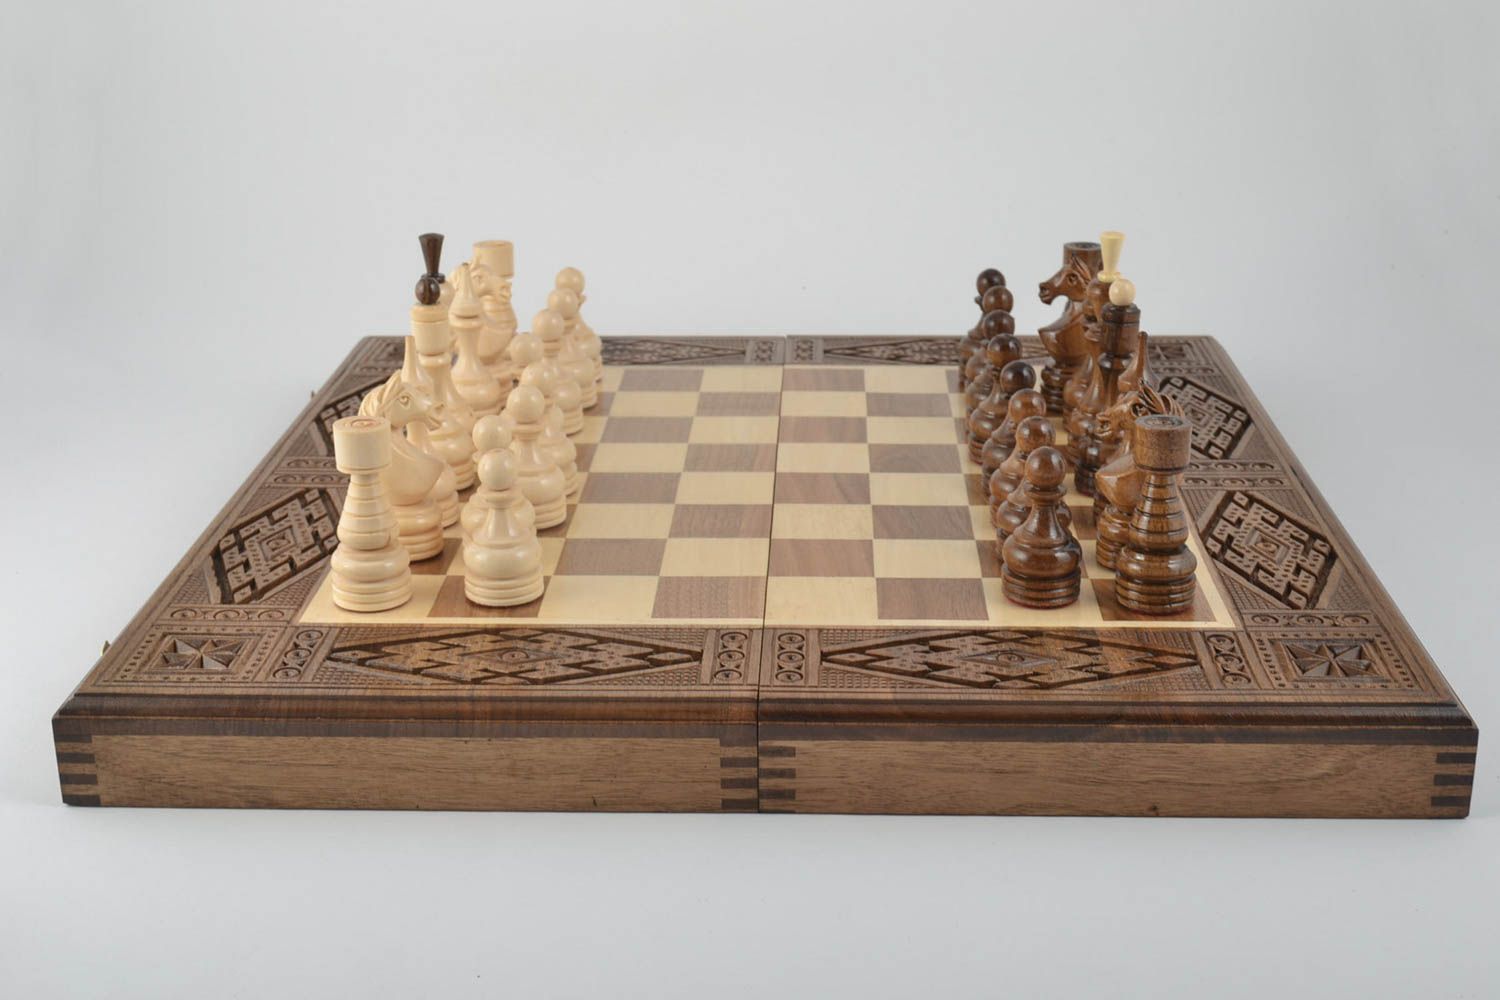 Beautiful handmade wooden chessboard chess board design board games gift ideas photo 2